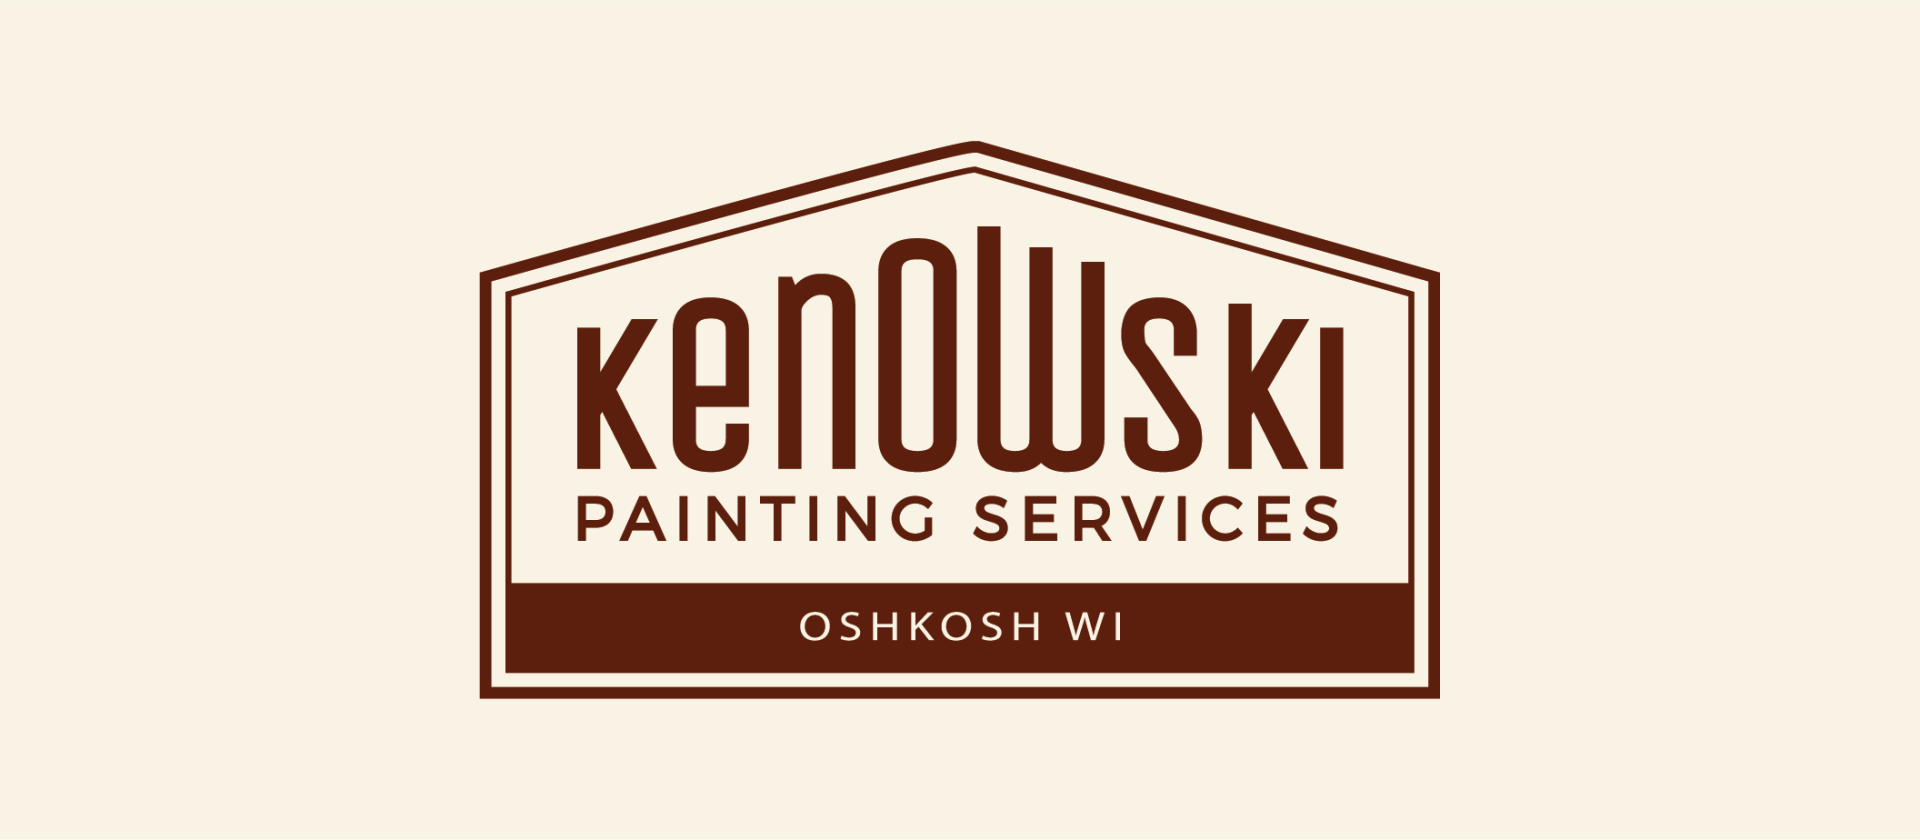 Kenowski Painting Services - Logo